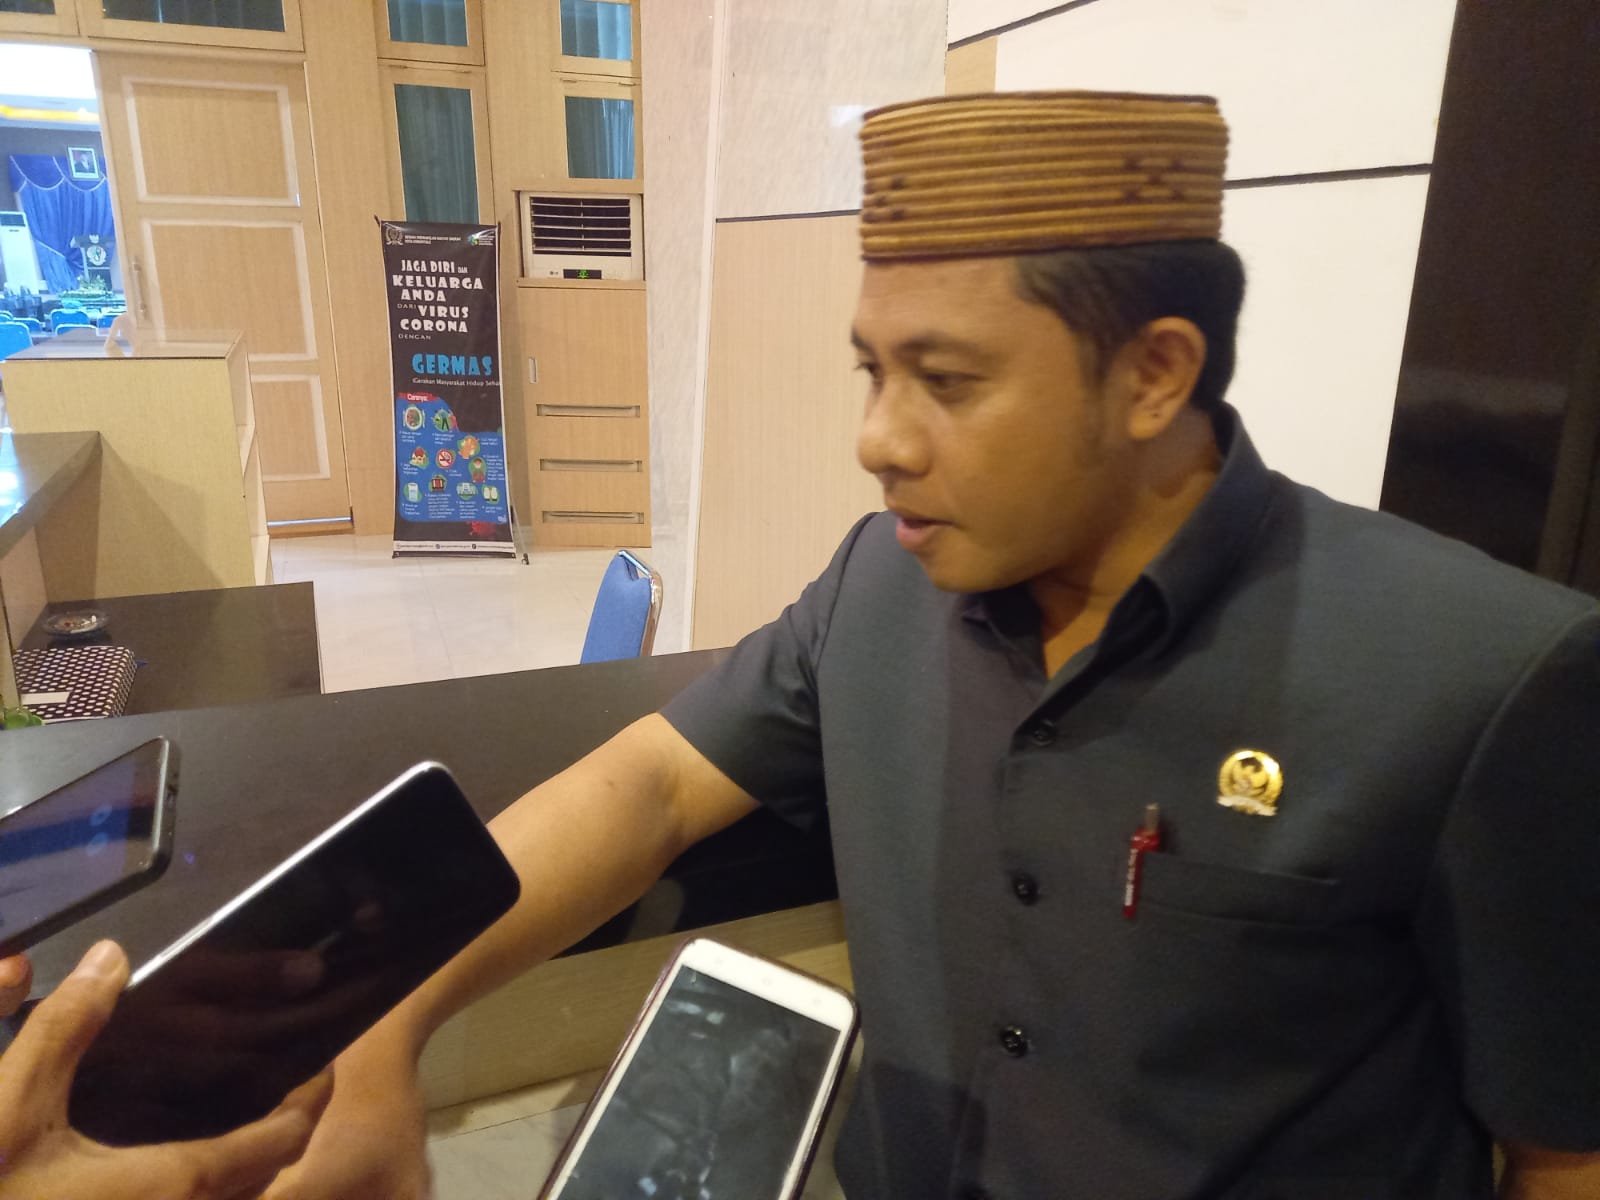 DPRD Bahas Masalah Yang Ada di Kota Gorontalo Bersama Mahasiswa dan OPD